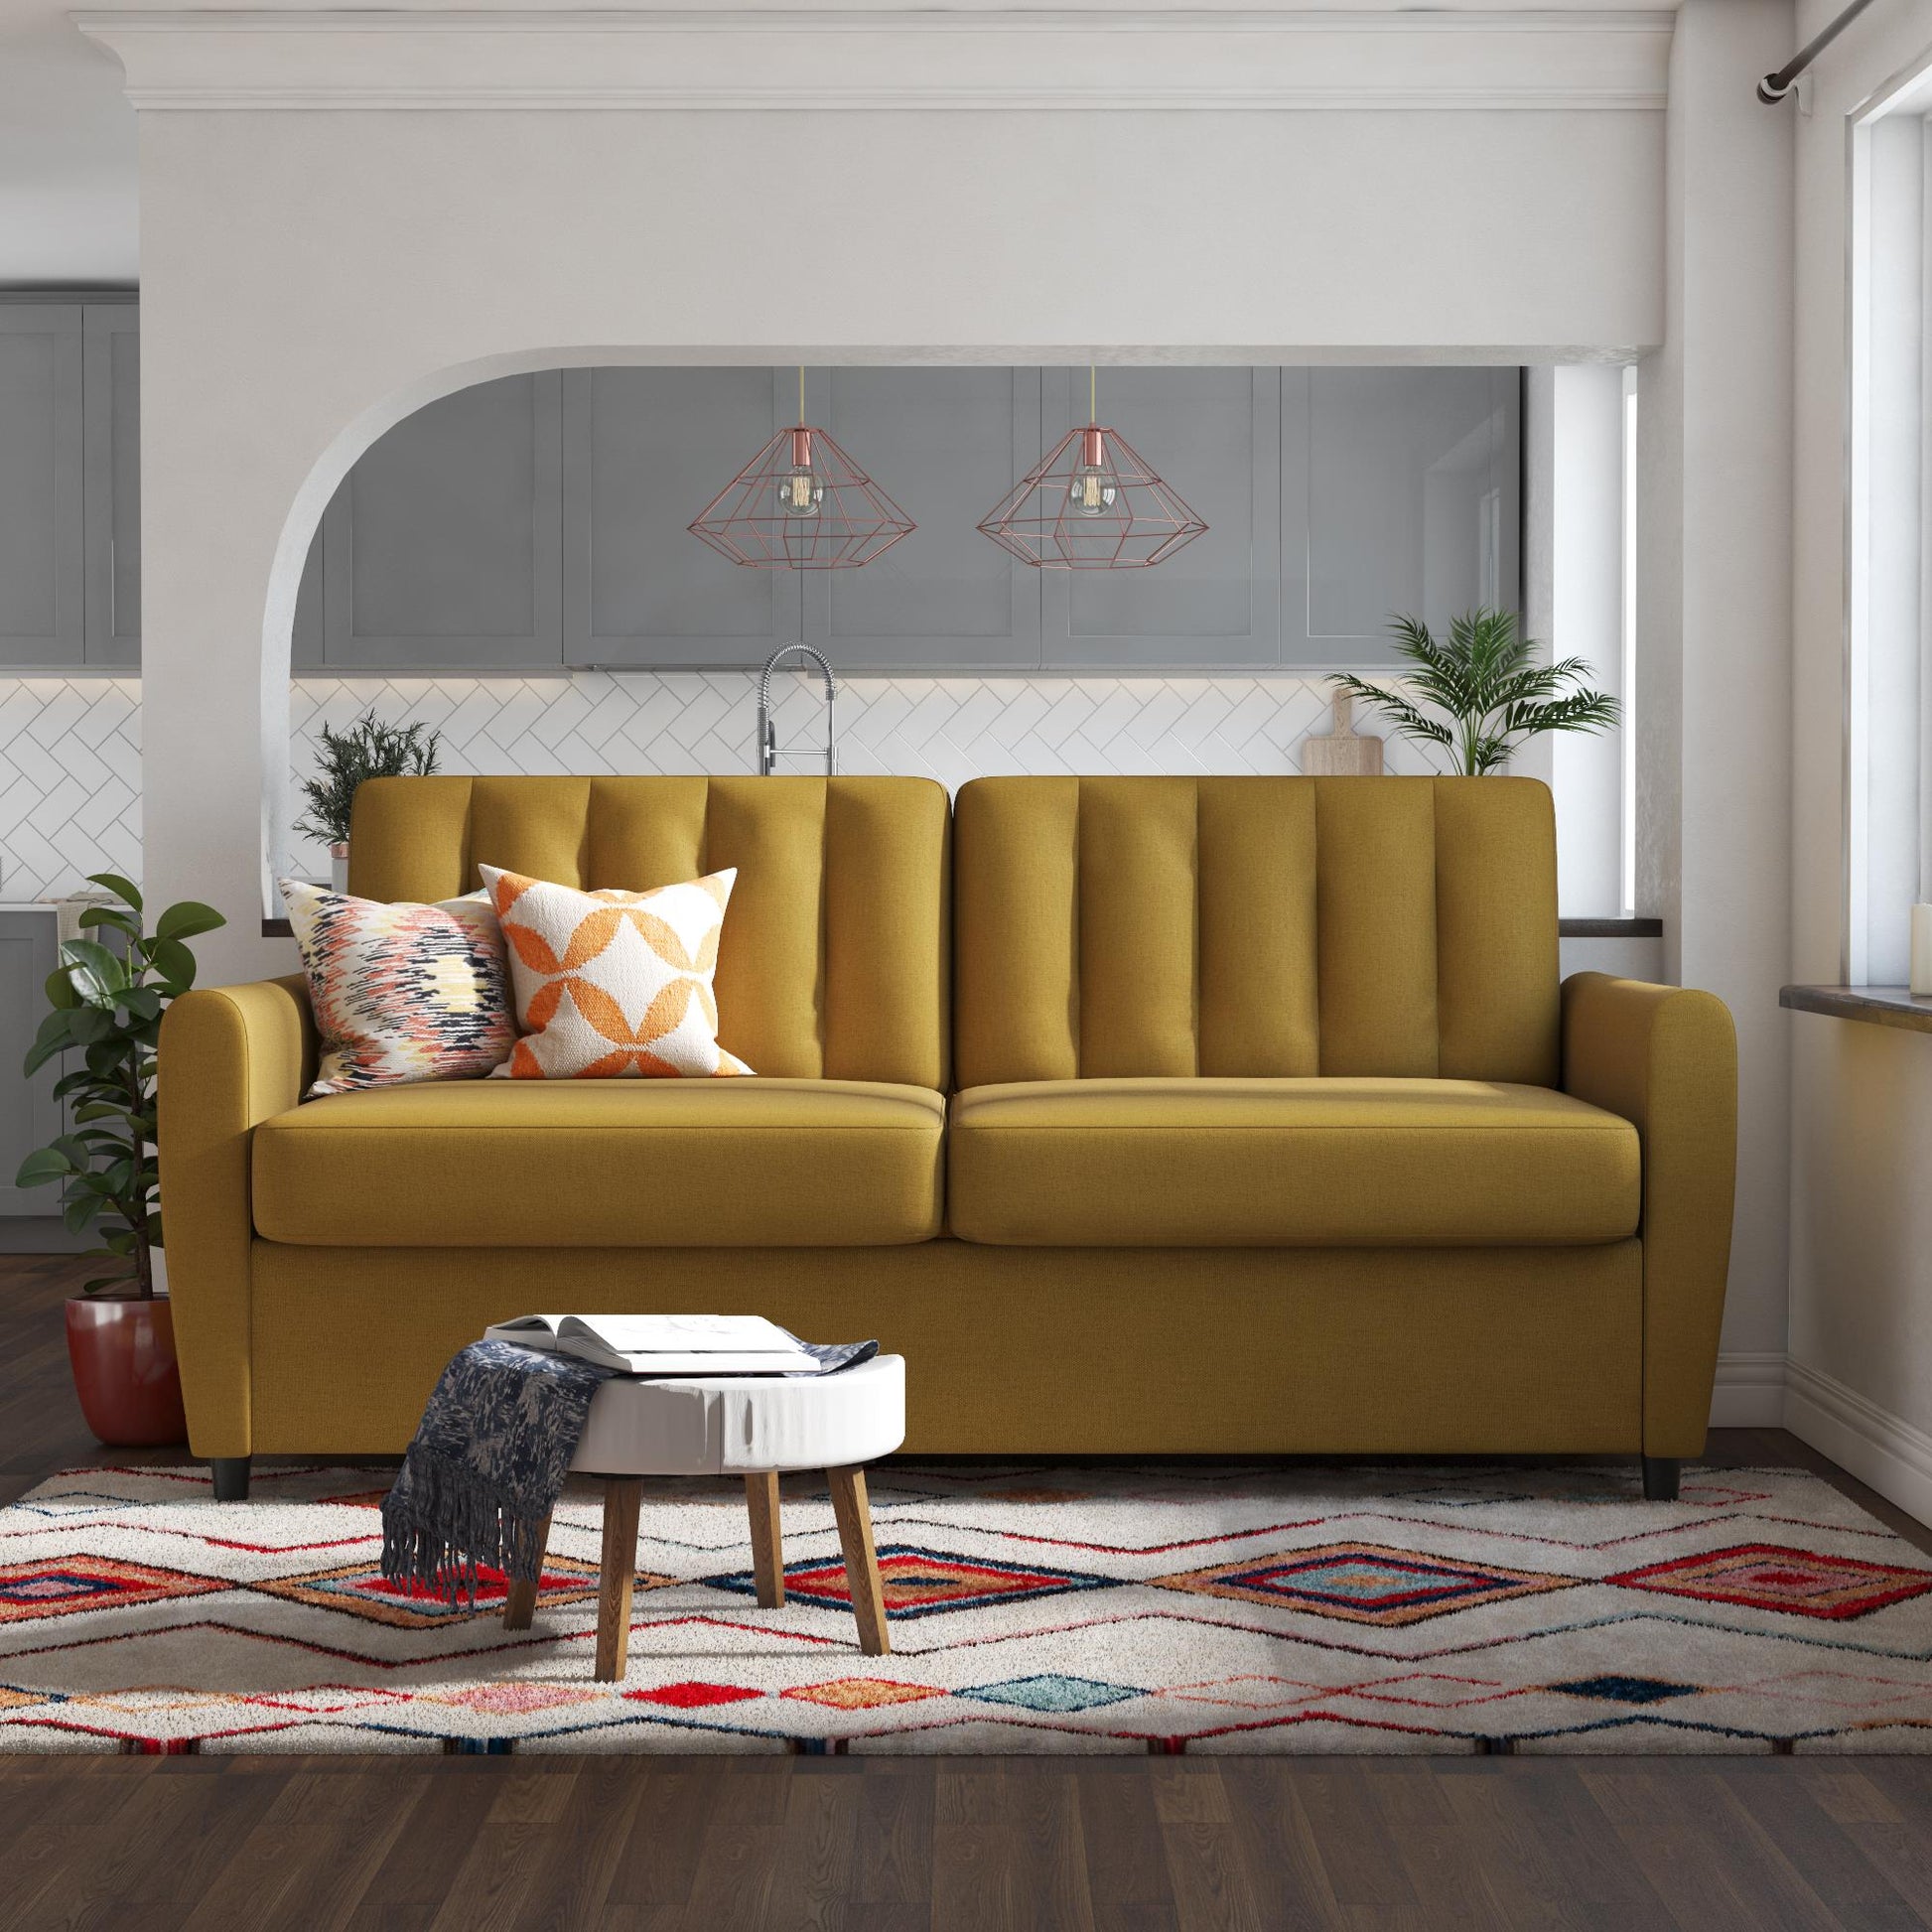 Novogratz Brittany Sleeper Sofa with Memory Foam Mattress, Queen, Mustard Linen - Mustard - Queen